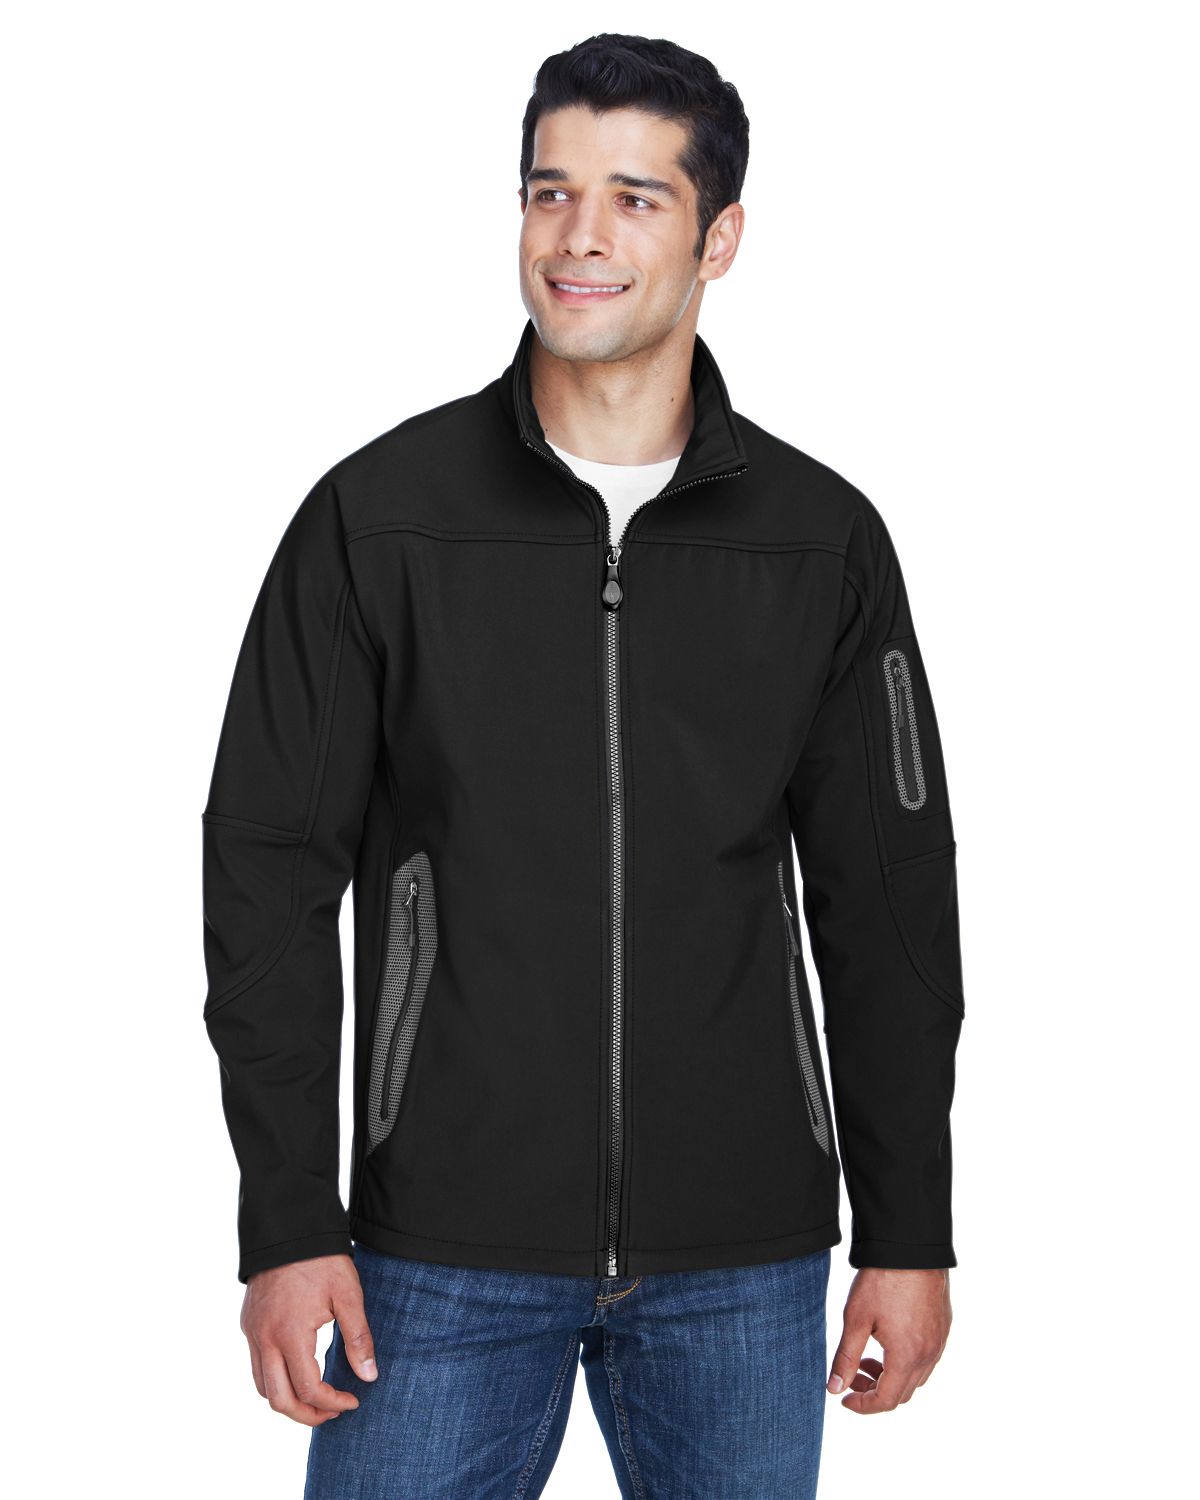 Men's Three-Layer Fleece Bonded Soft Shell Technical Jacket - BLACK - XL - image 1 of 3